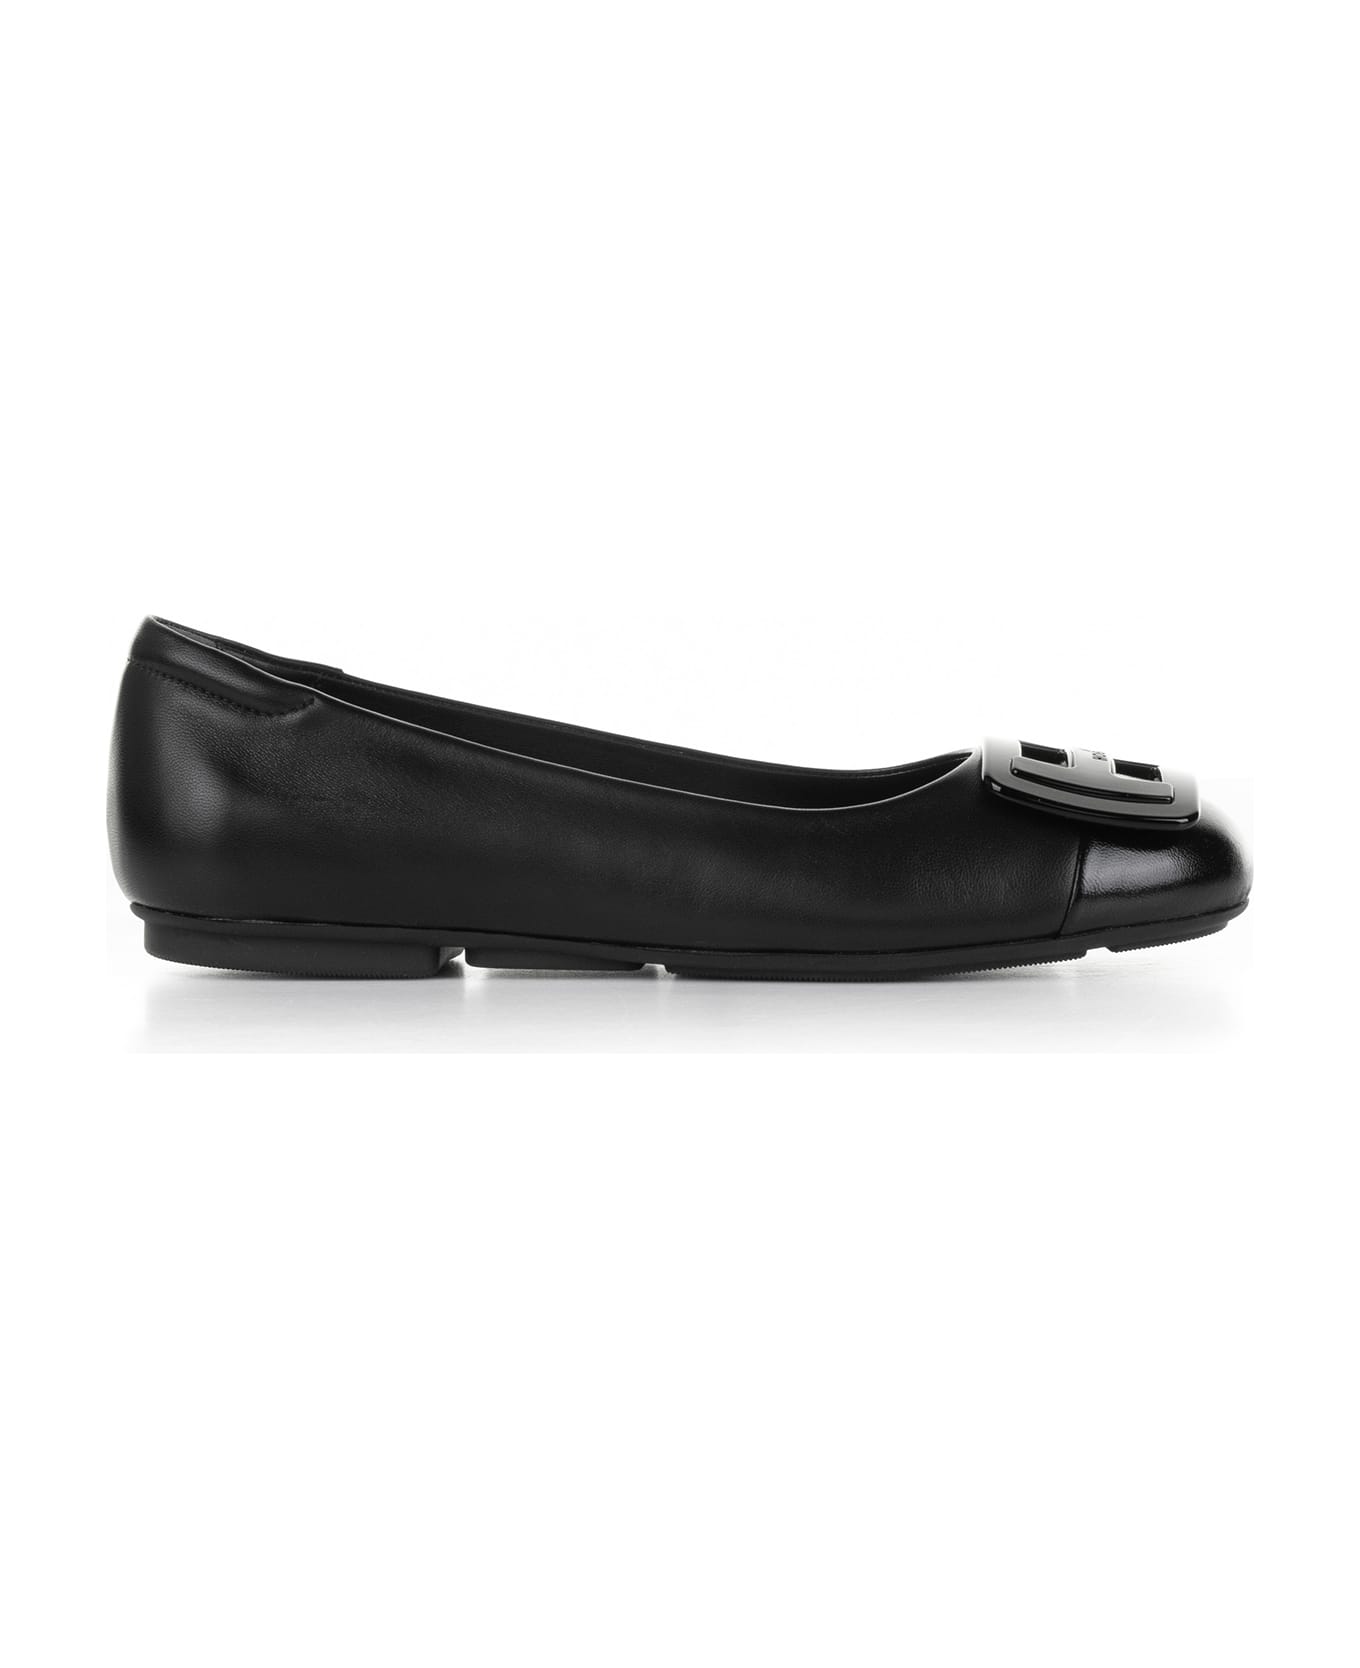 Hogan H661 Patent Leather Ballet Flats - Black フラットシューズ